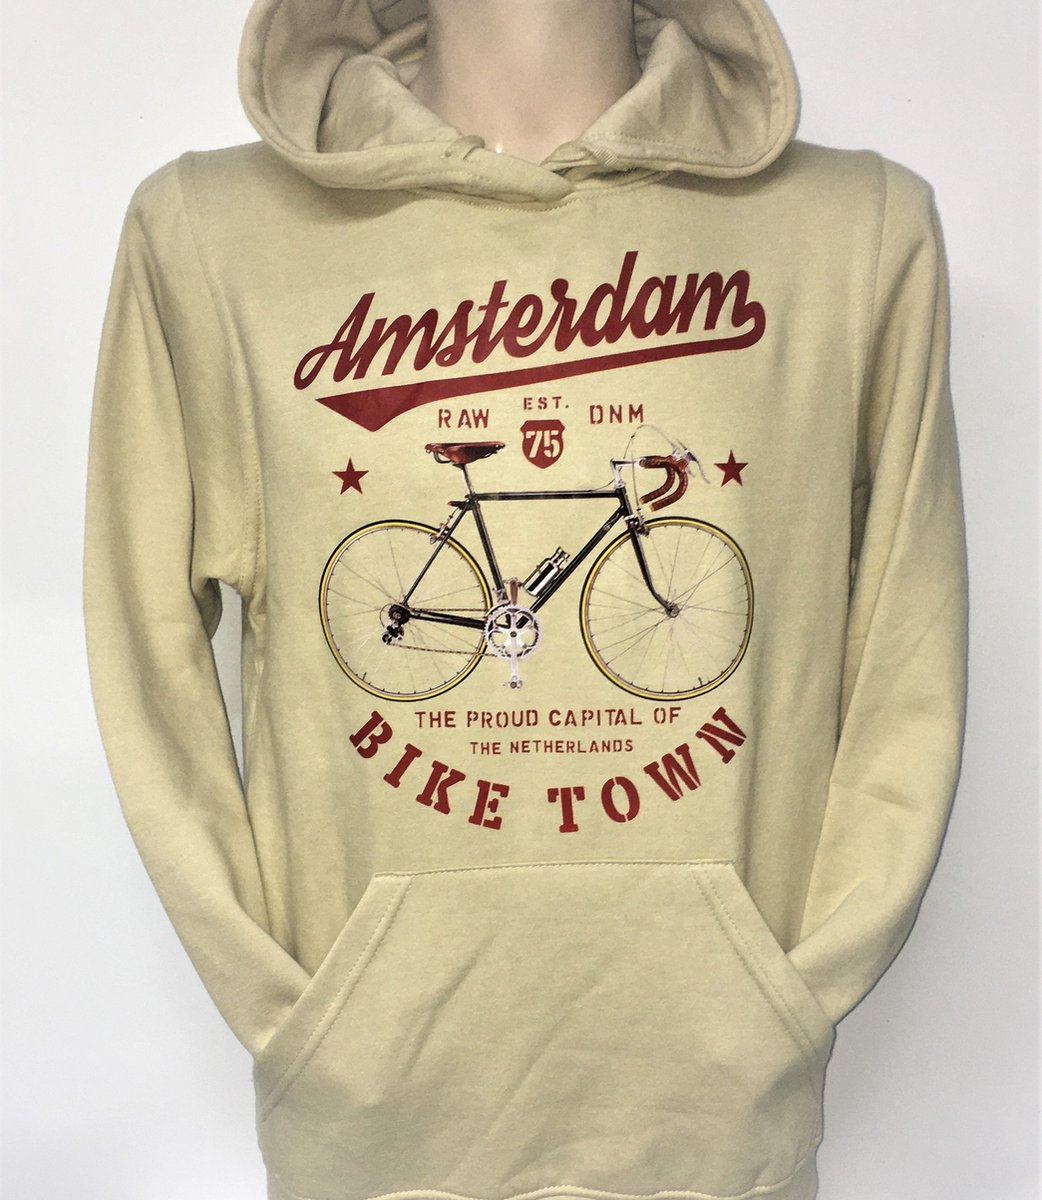 Hooded Sweater - Met Trekkoord - Capuchon - Chill - Trui - Vest - met capuchon - Outdoor - Fiets - Raw - Denim - Race Fiets - Capital Amsterdam - Bike Town - Race Fiets Amsterdam - Zand - Beige - Maat XS